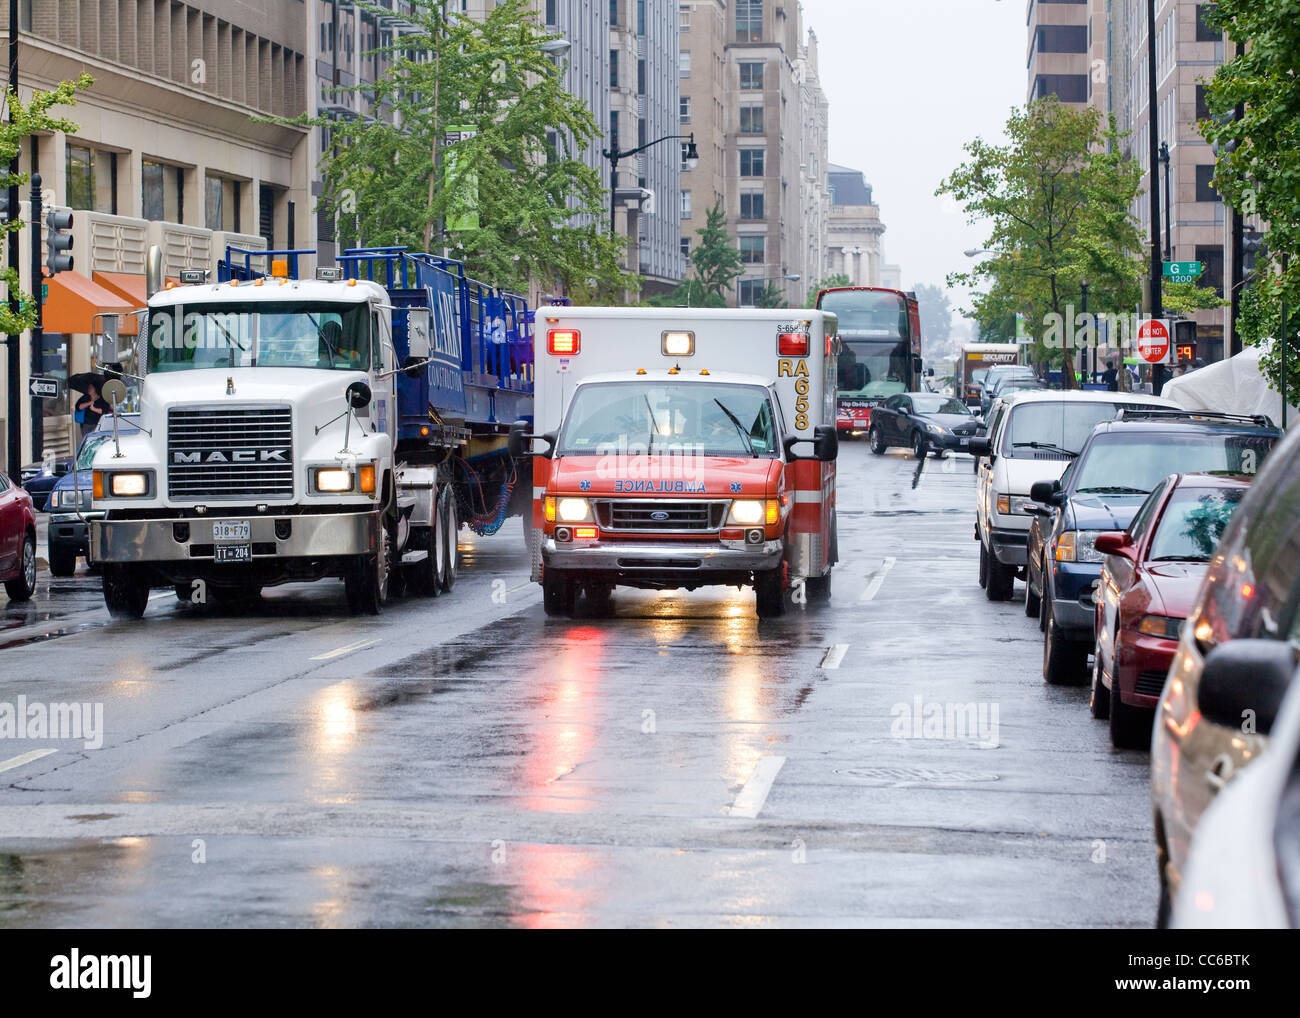 An ambulance racing down a city street on a rainy day - Washington, DC USA Stock Photo